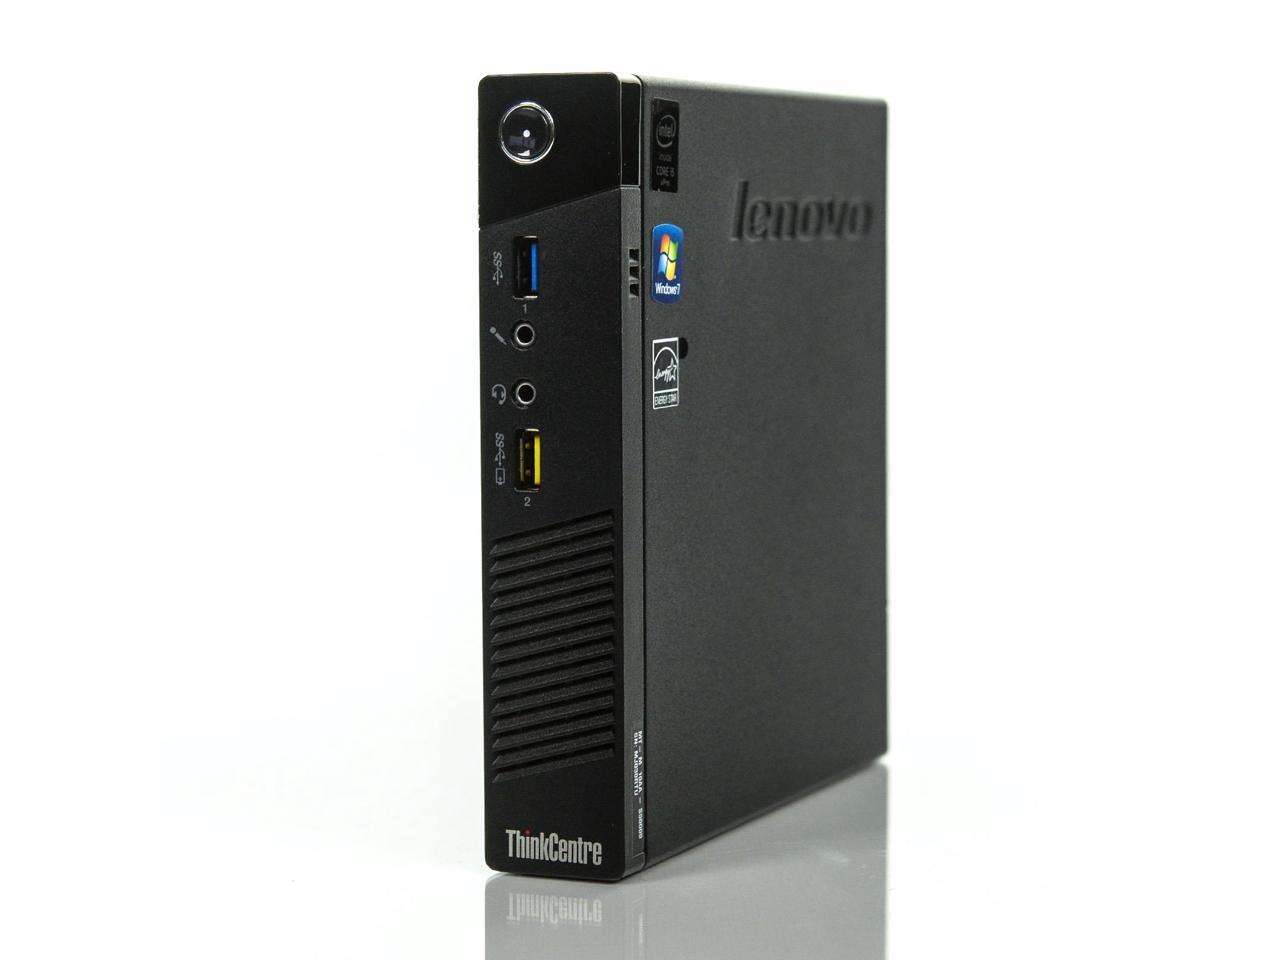 Lenovo ThinkCentre M93p Tiny i5-4570T 2.90GHz 8GB 256GB SSD Win 10 Pro 1 Yr Wty